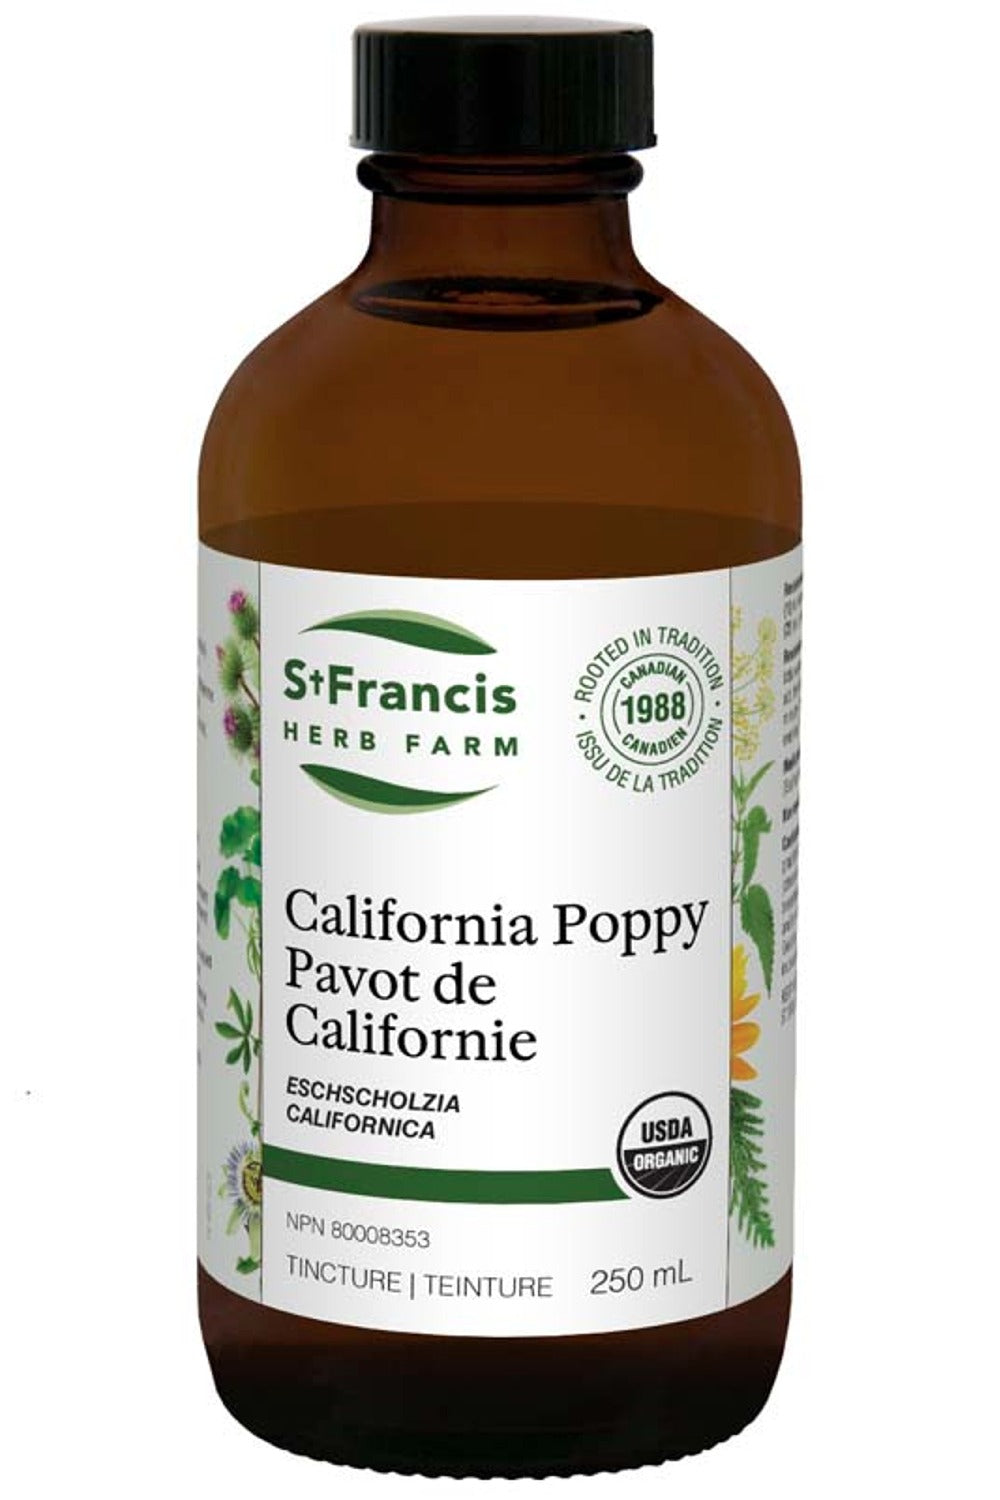 ST FRANCIS HERB FARM California Poppy (250 ml)